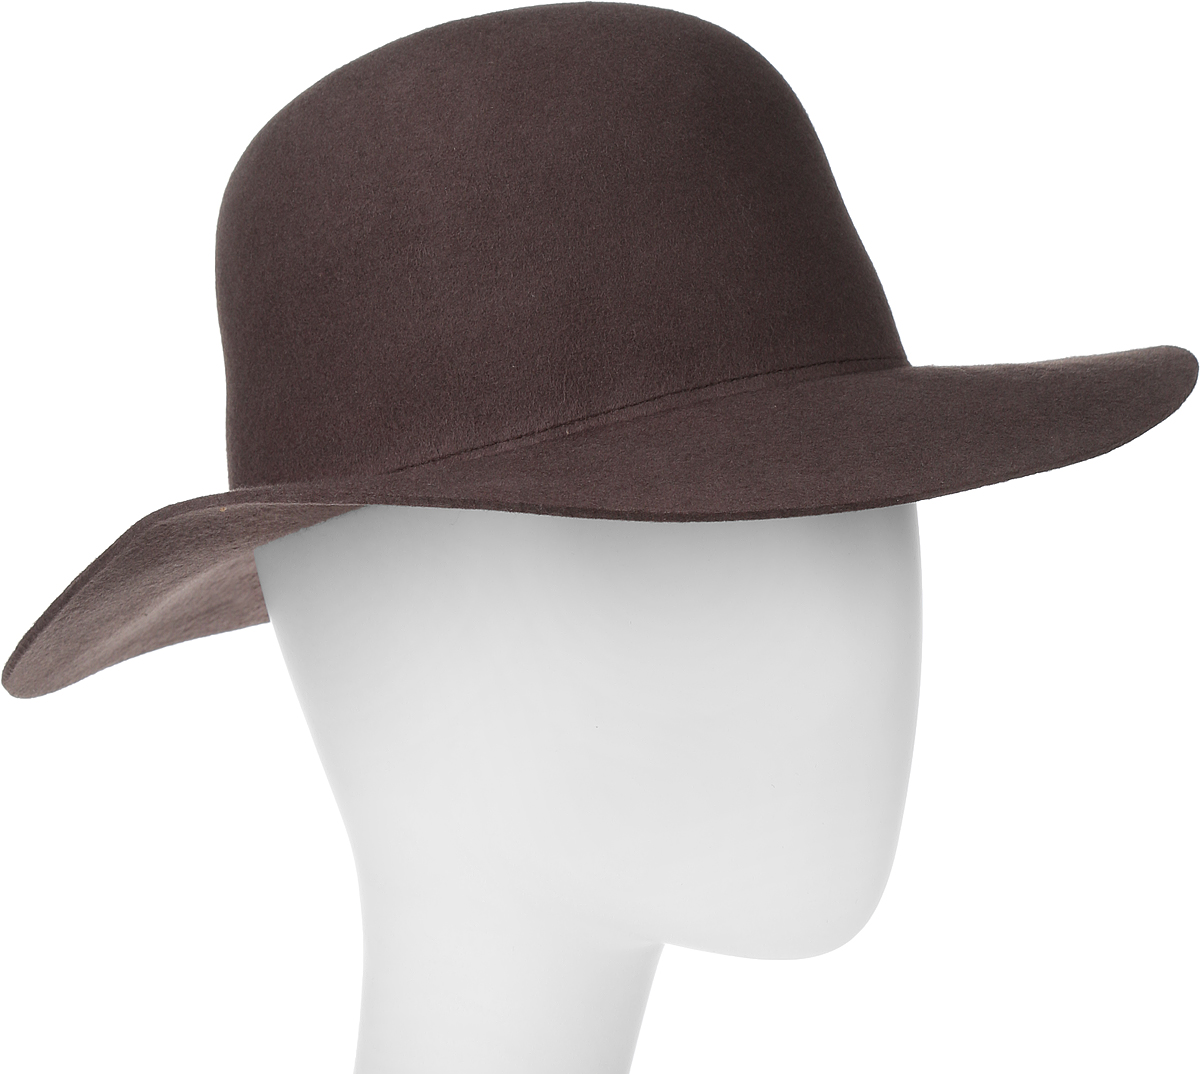 Шляпа Goorin Brothers, цвет: темно-коричневый. 100-9697. Размер L (59)